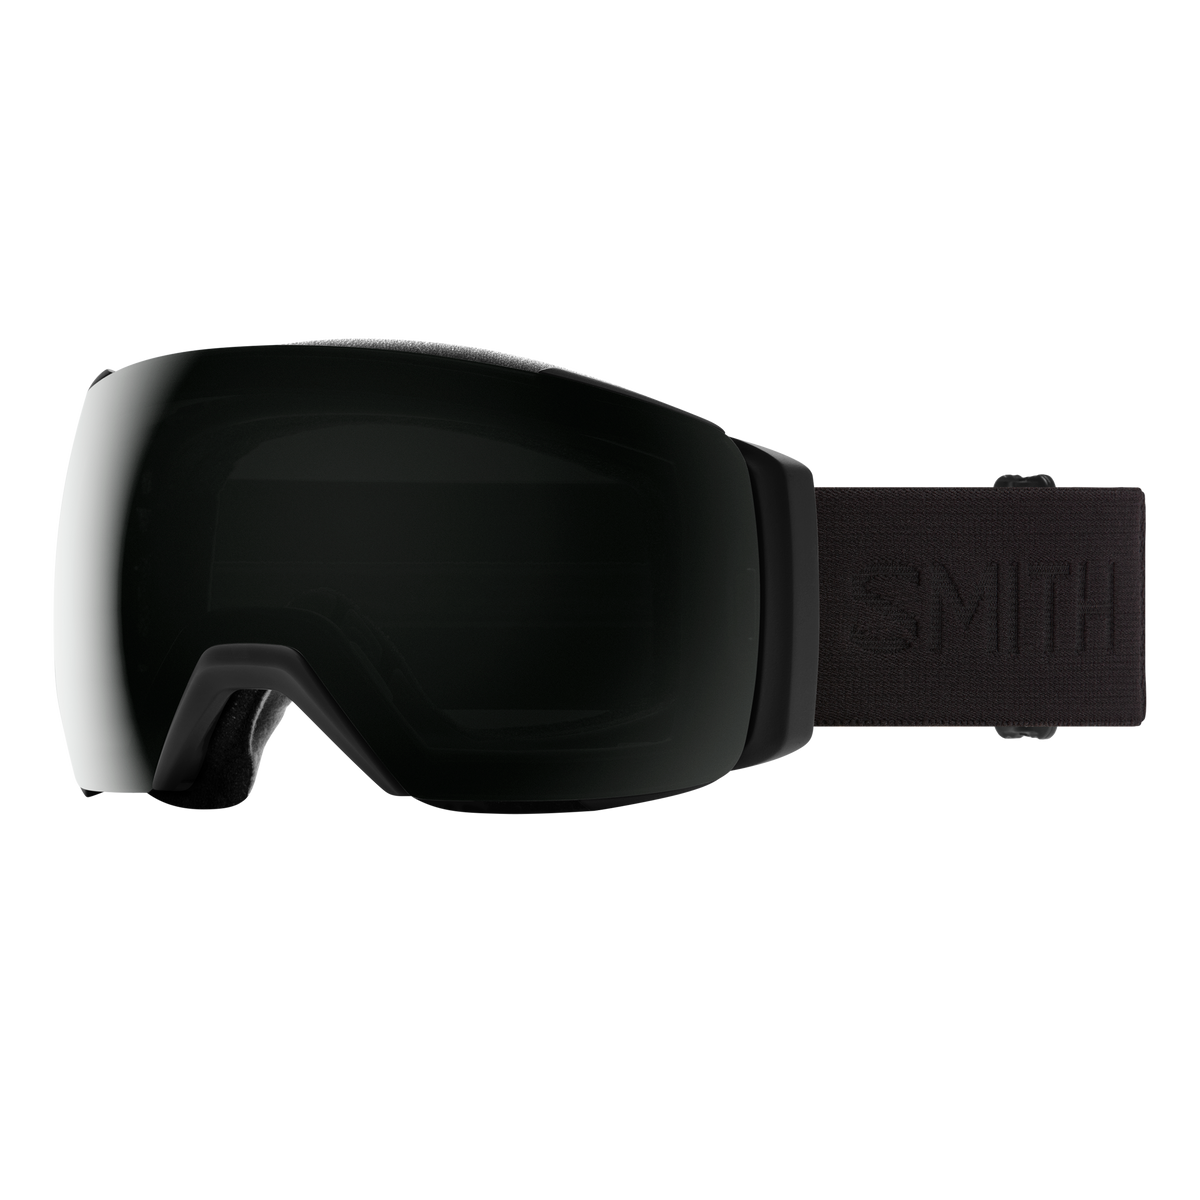 Smith - I/O Mag XL Goggles | Rick's Pro Ski Shop